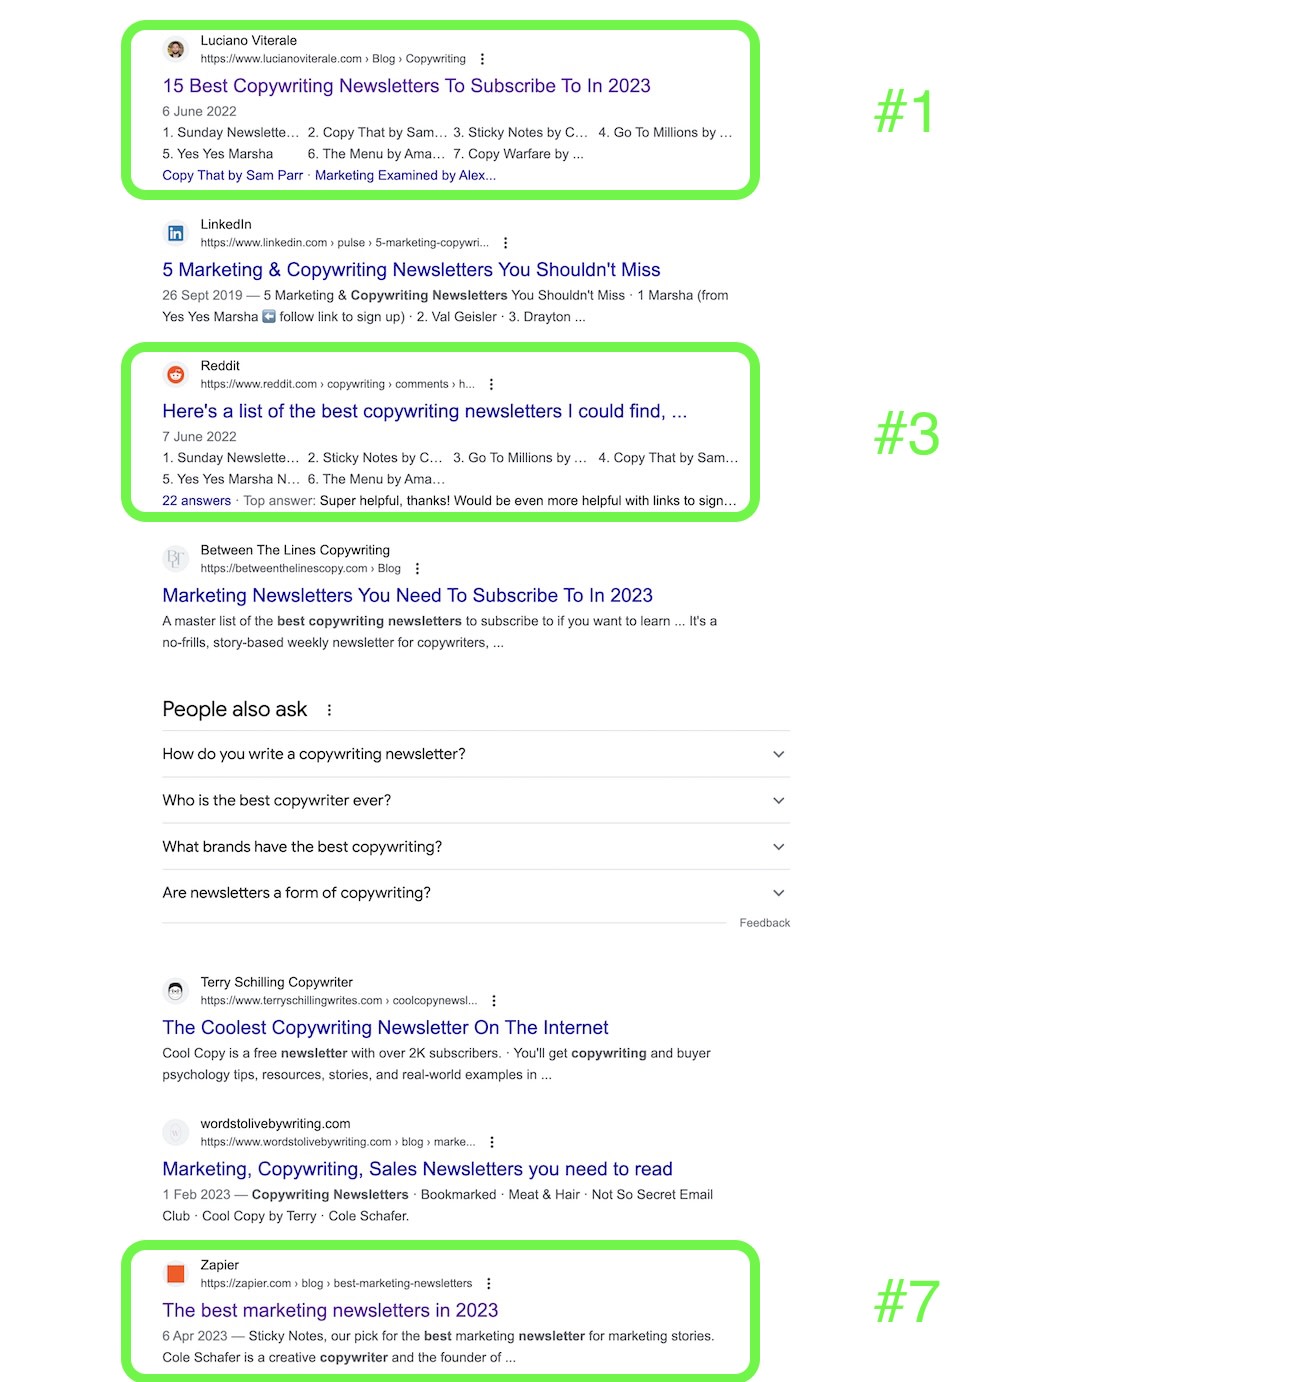 Google results for "copywriting newsletter"